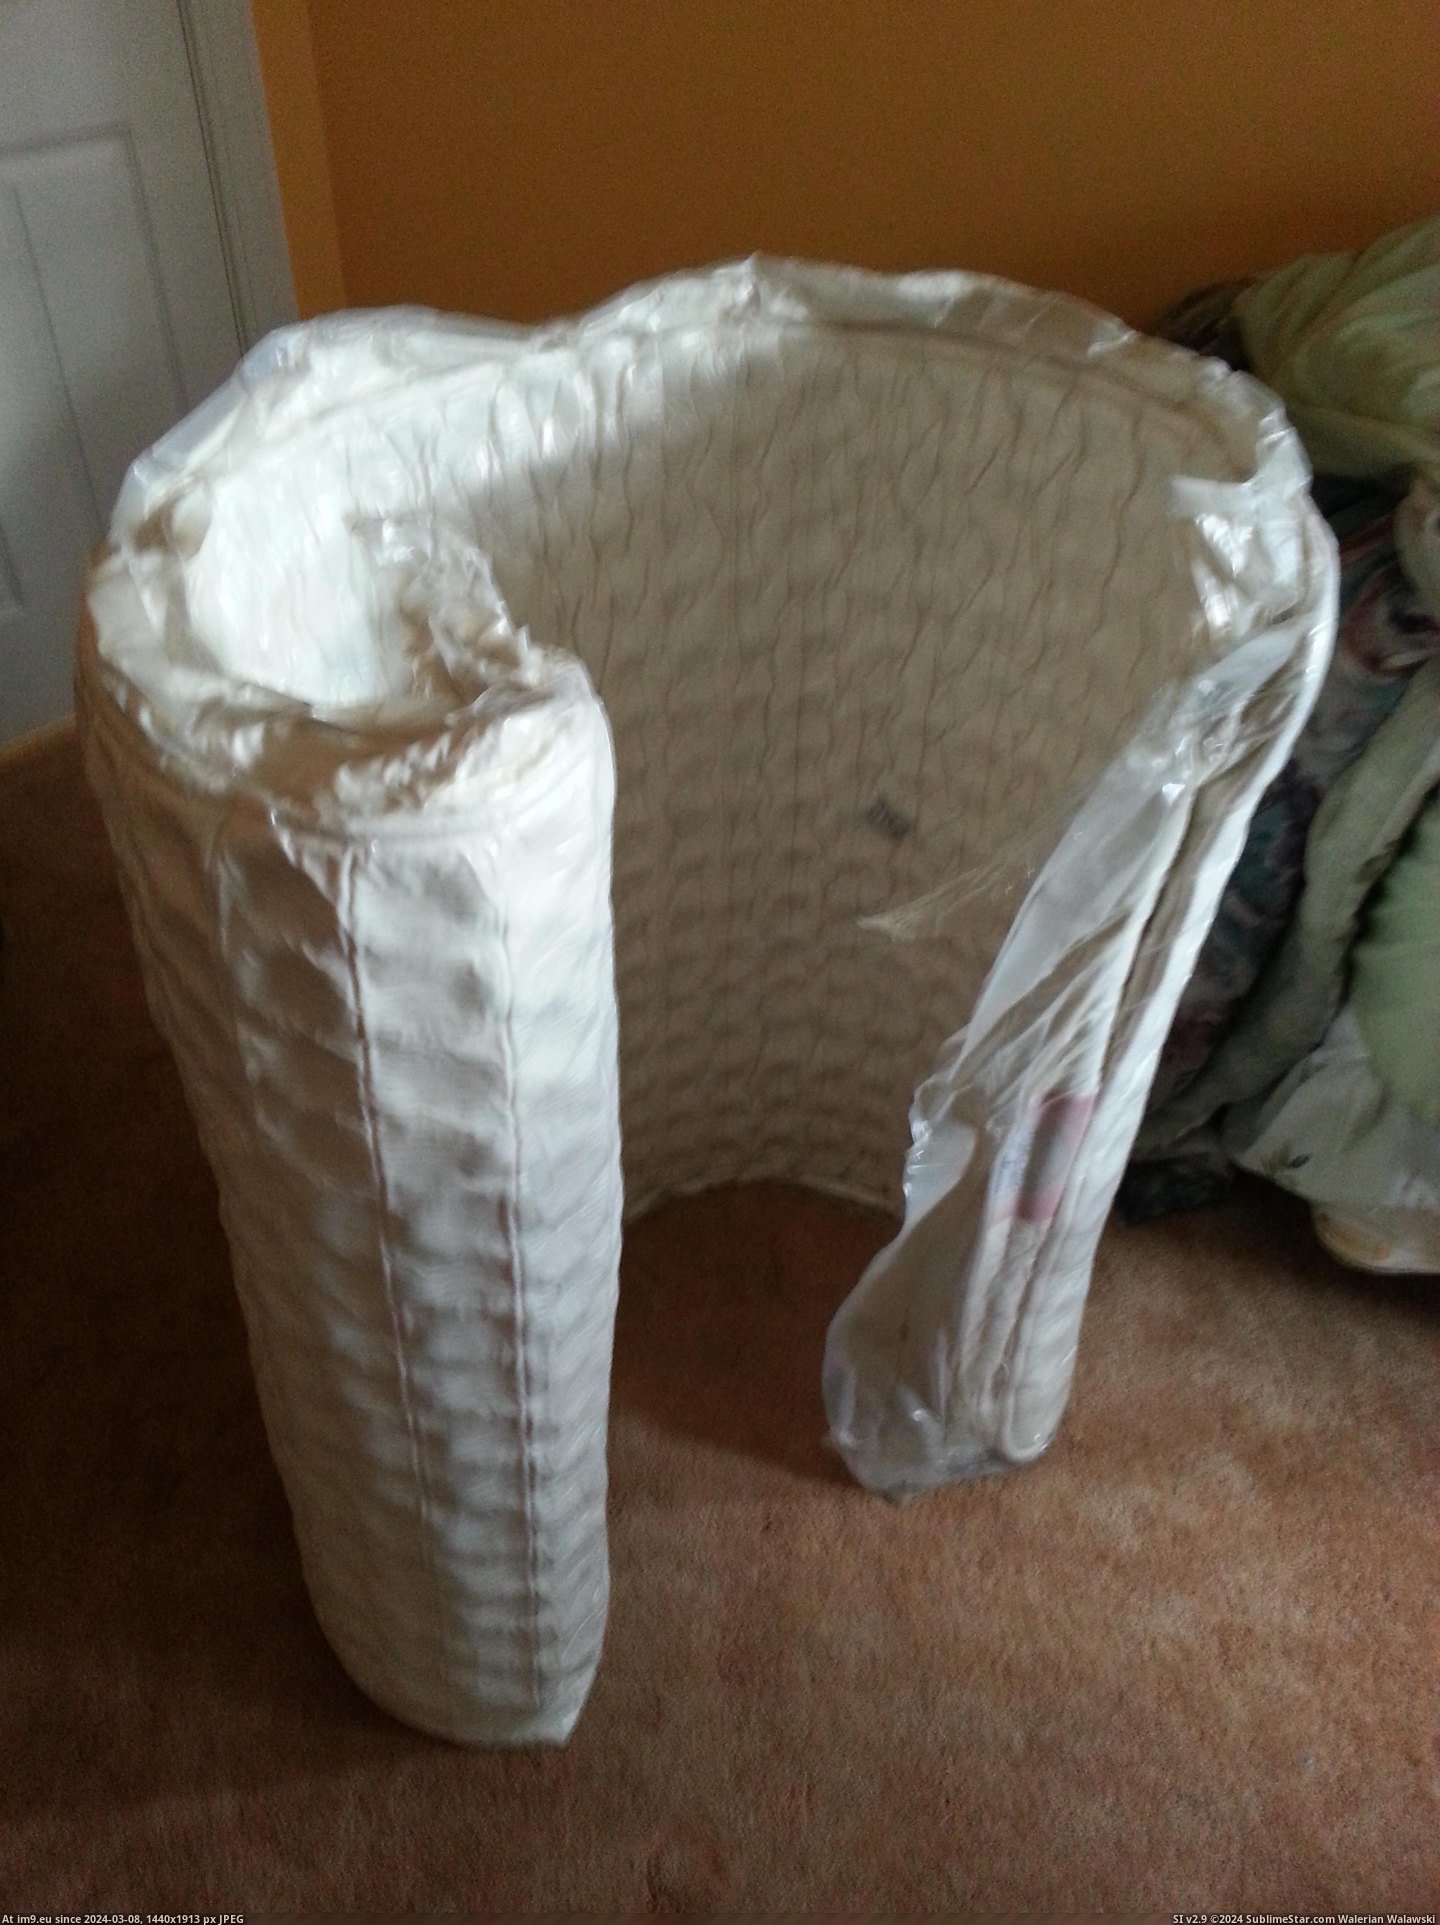 #Broke #Bag #Vacuum #Duffle #Unrolled #Seal #Mattress [Mildlyinteresting] Got a mattress in a duffle bag today, unrolled it and broke the vacuum seal 4 Pic. (Image of album My r/MILDLYINTERESTING favs))